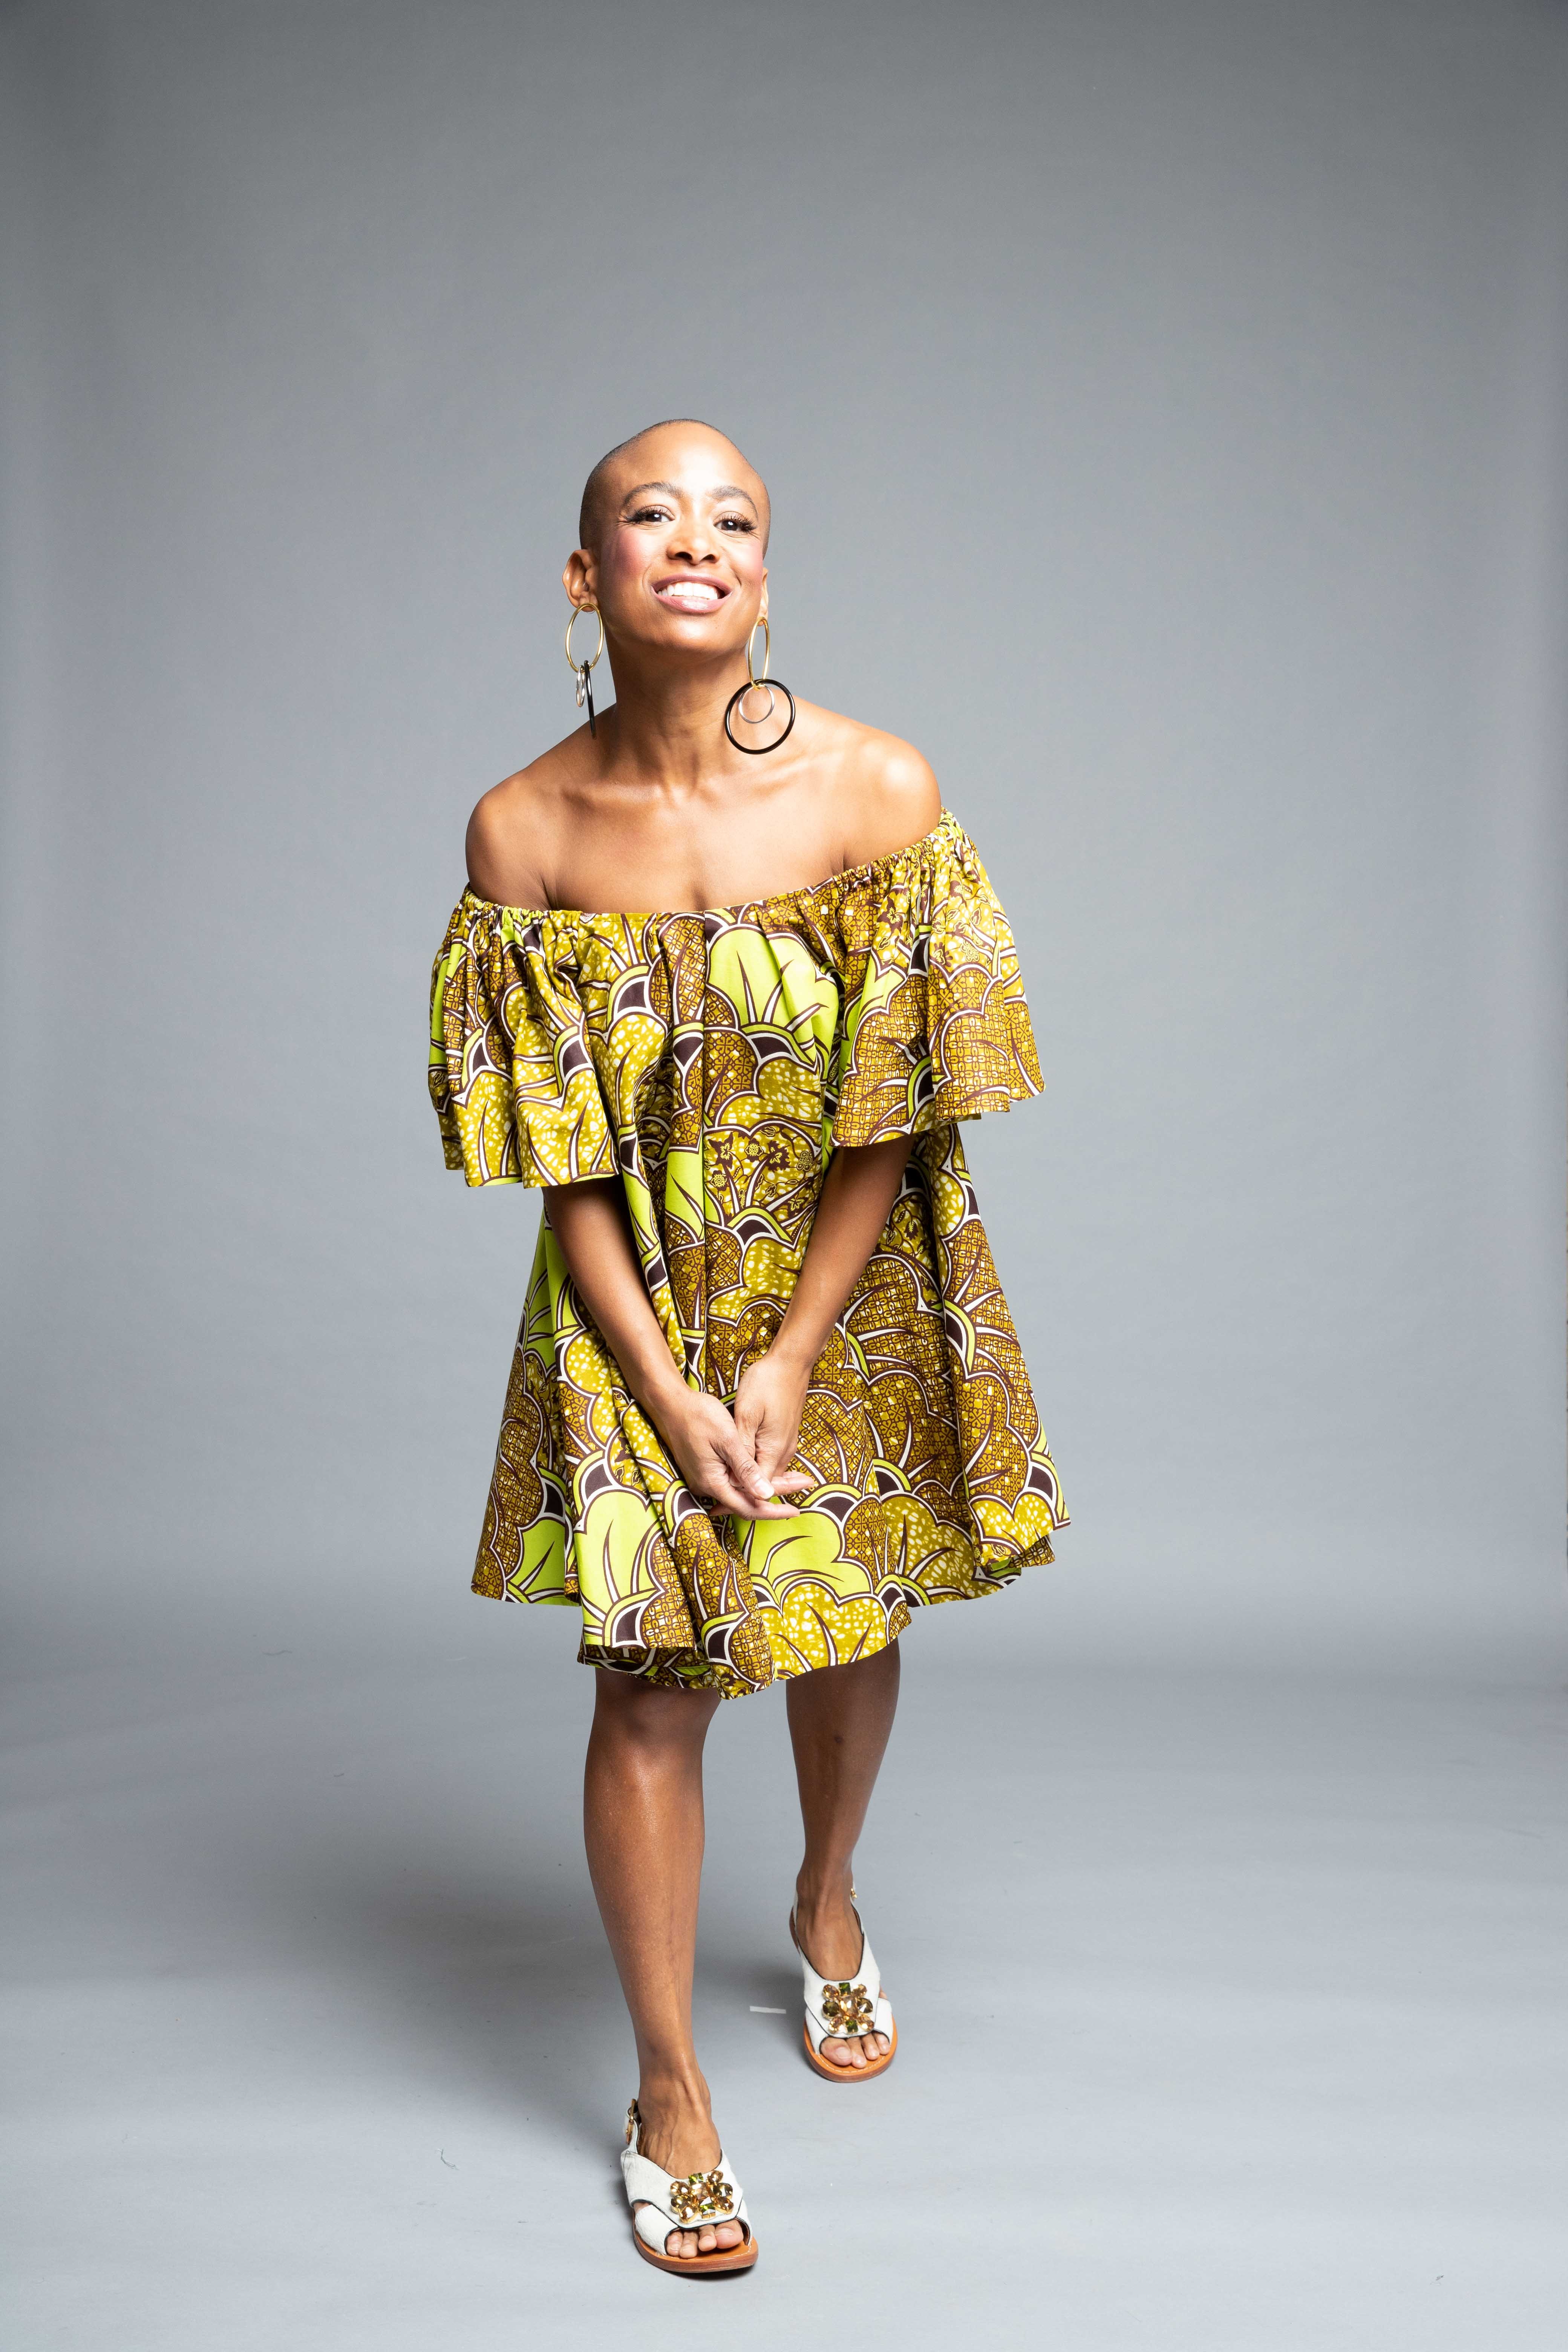 Abby Schirmacher, 303 Magazine, The OULA Company, Erika Dalya Massaquoi, Denver Fashion, Black Culture, Black Designers, Ankara African Wax Fabric, Nordstrom 